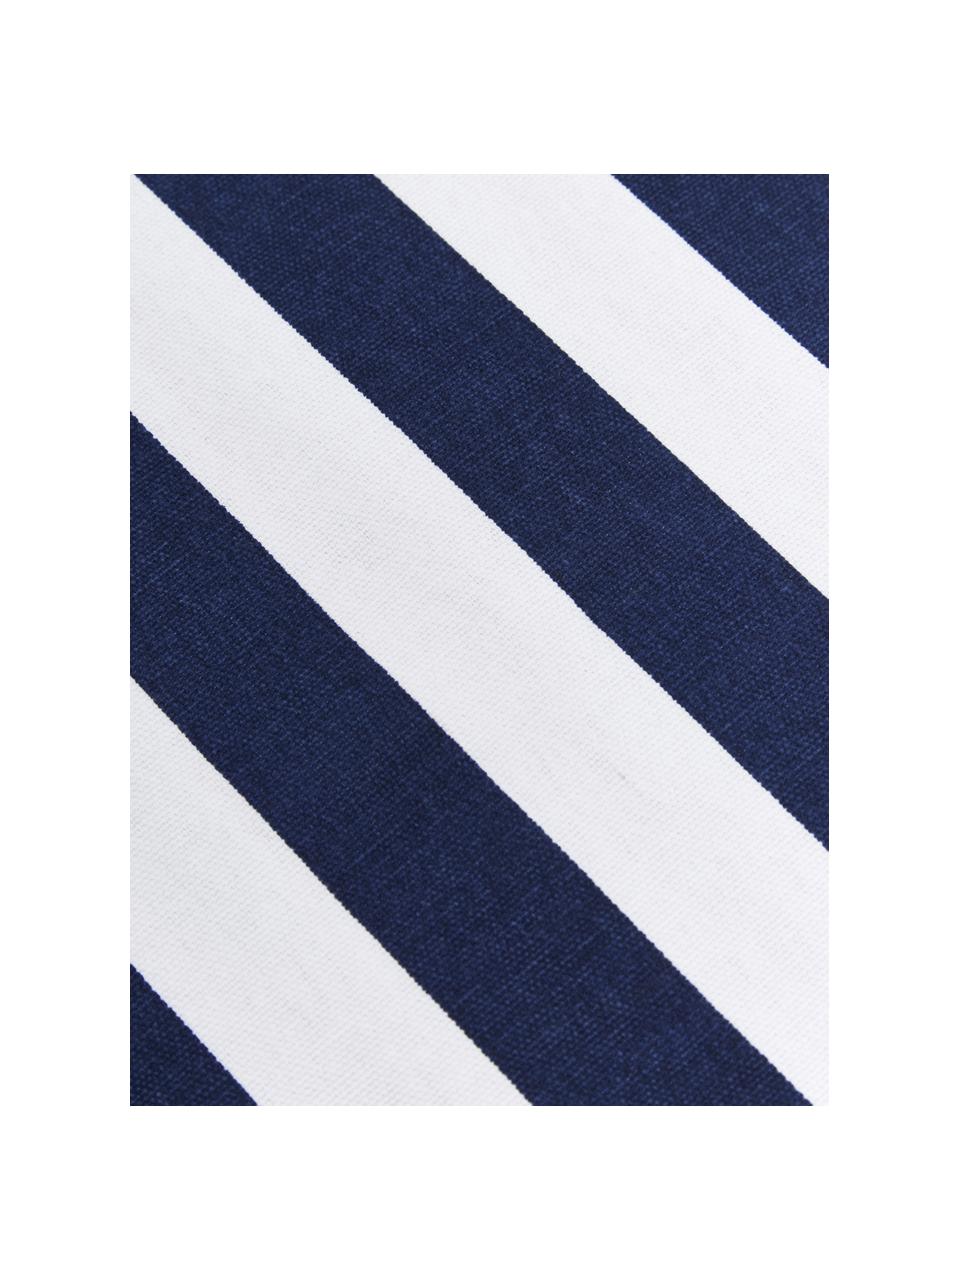 Gestreept stoelkussen Timon in donkerblauw/wit, Donkerblauw, wit, B 40 x L 40 cm